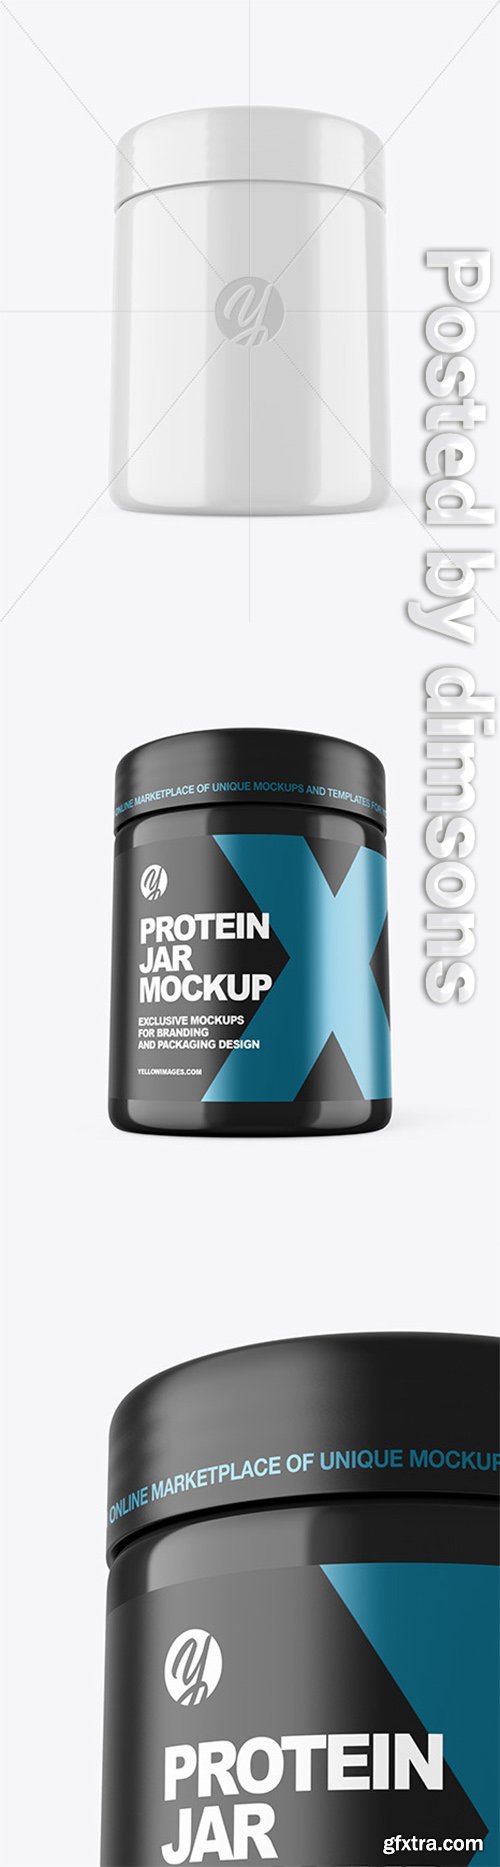 Glossy Protein Jar Mockup 52097